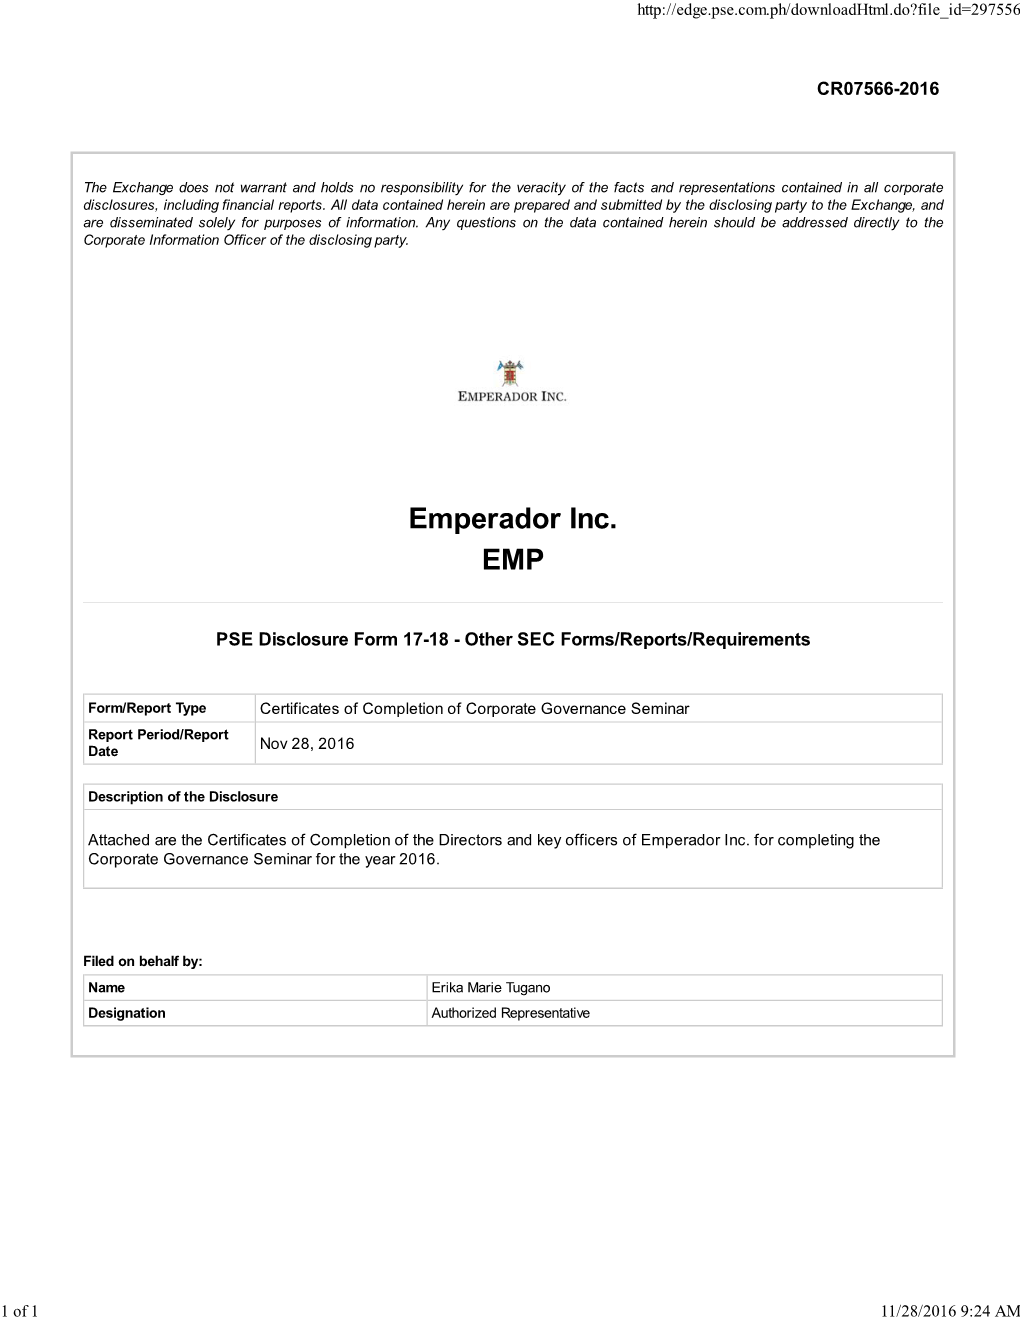 CR07566-2016 PSE Disclosure Form 17-18